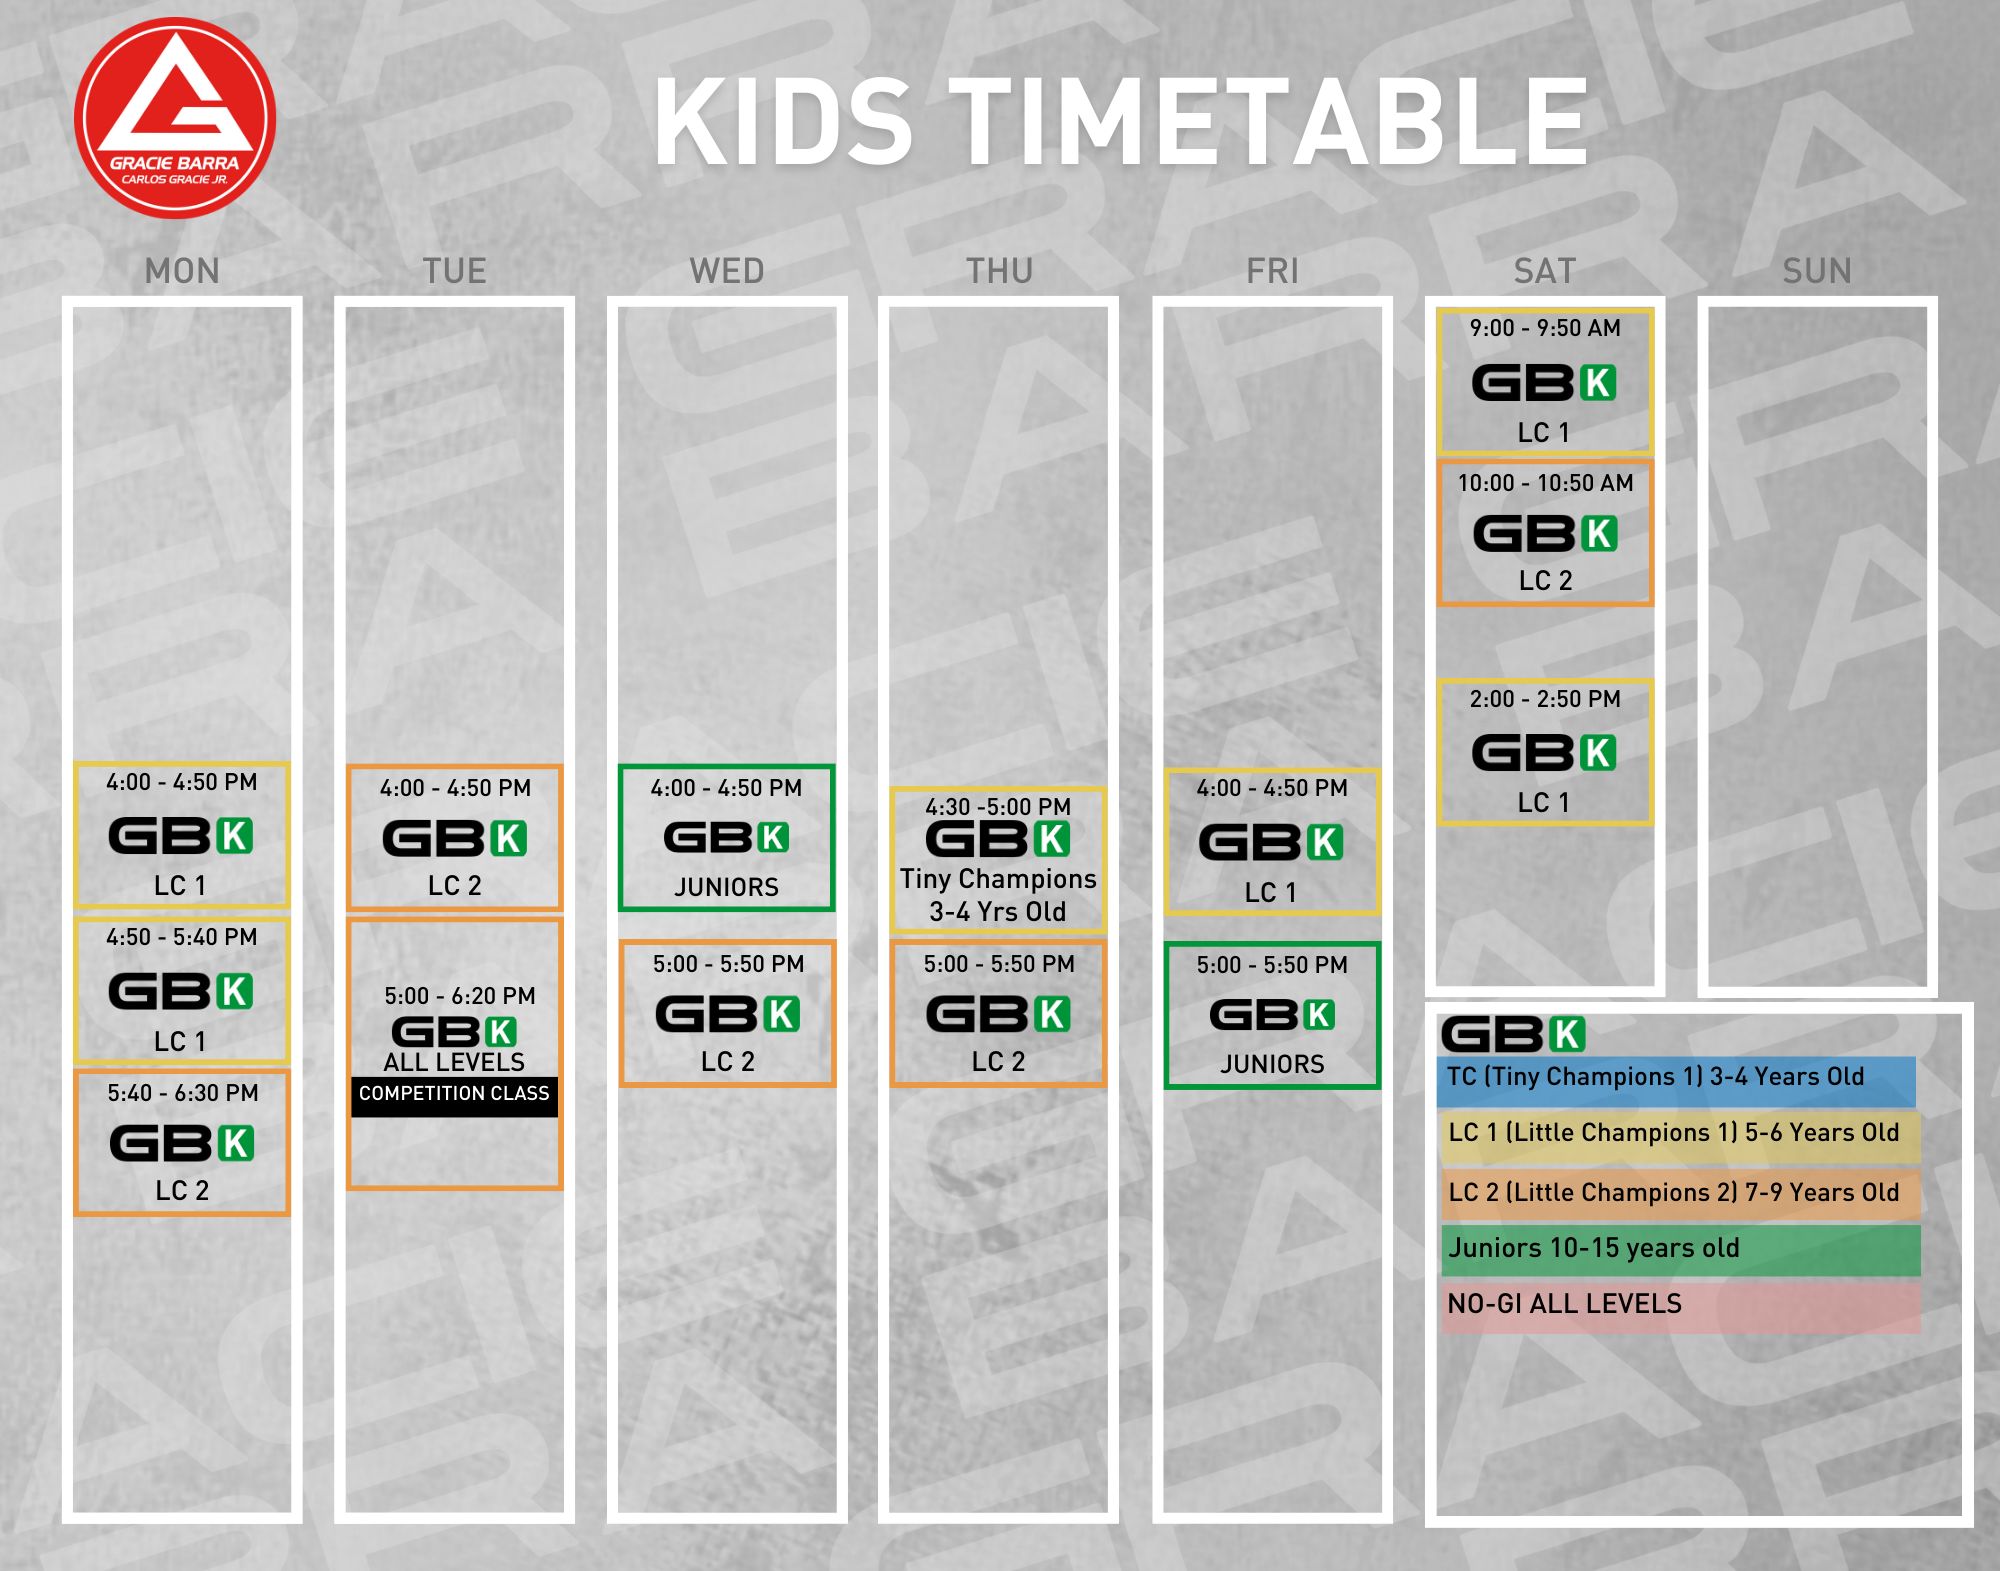 Kid's timetable